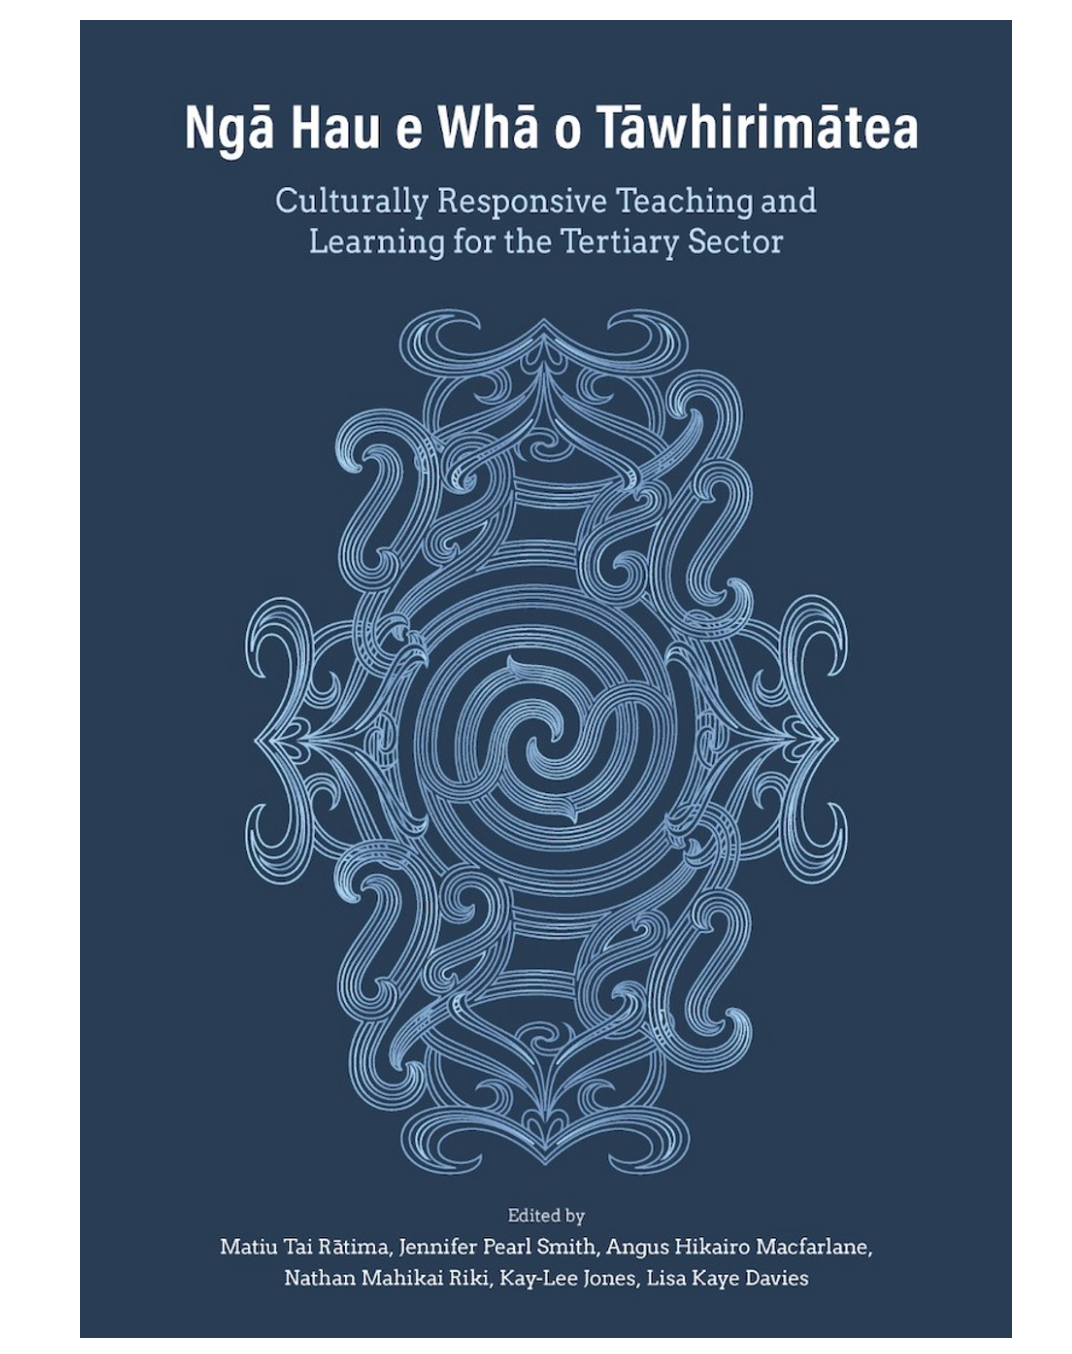 Ngā Hau e Whā o Tāwhirimatea: A Culturally Responsive Teaching and Learning for Tertiary Sector